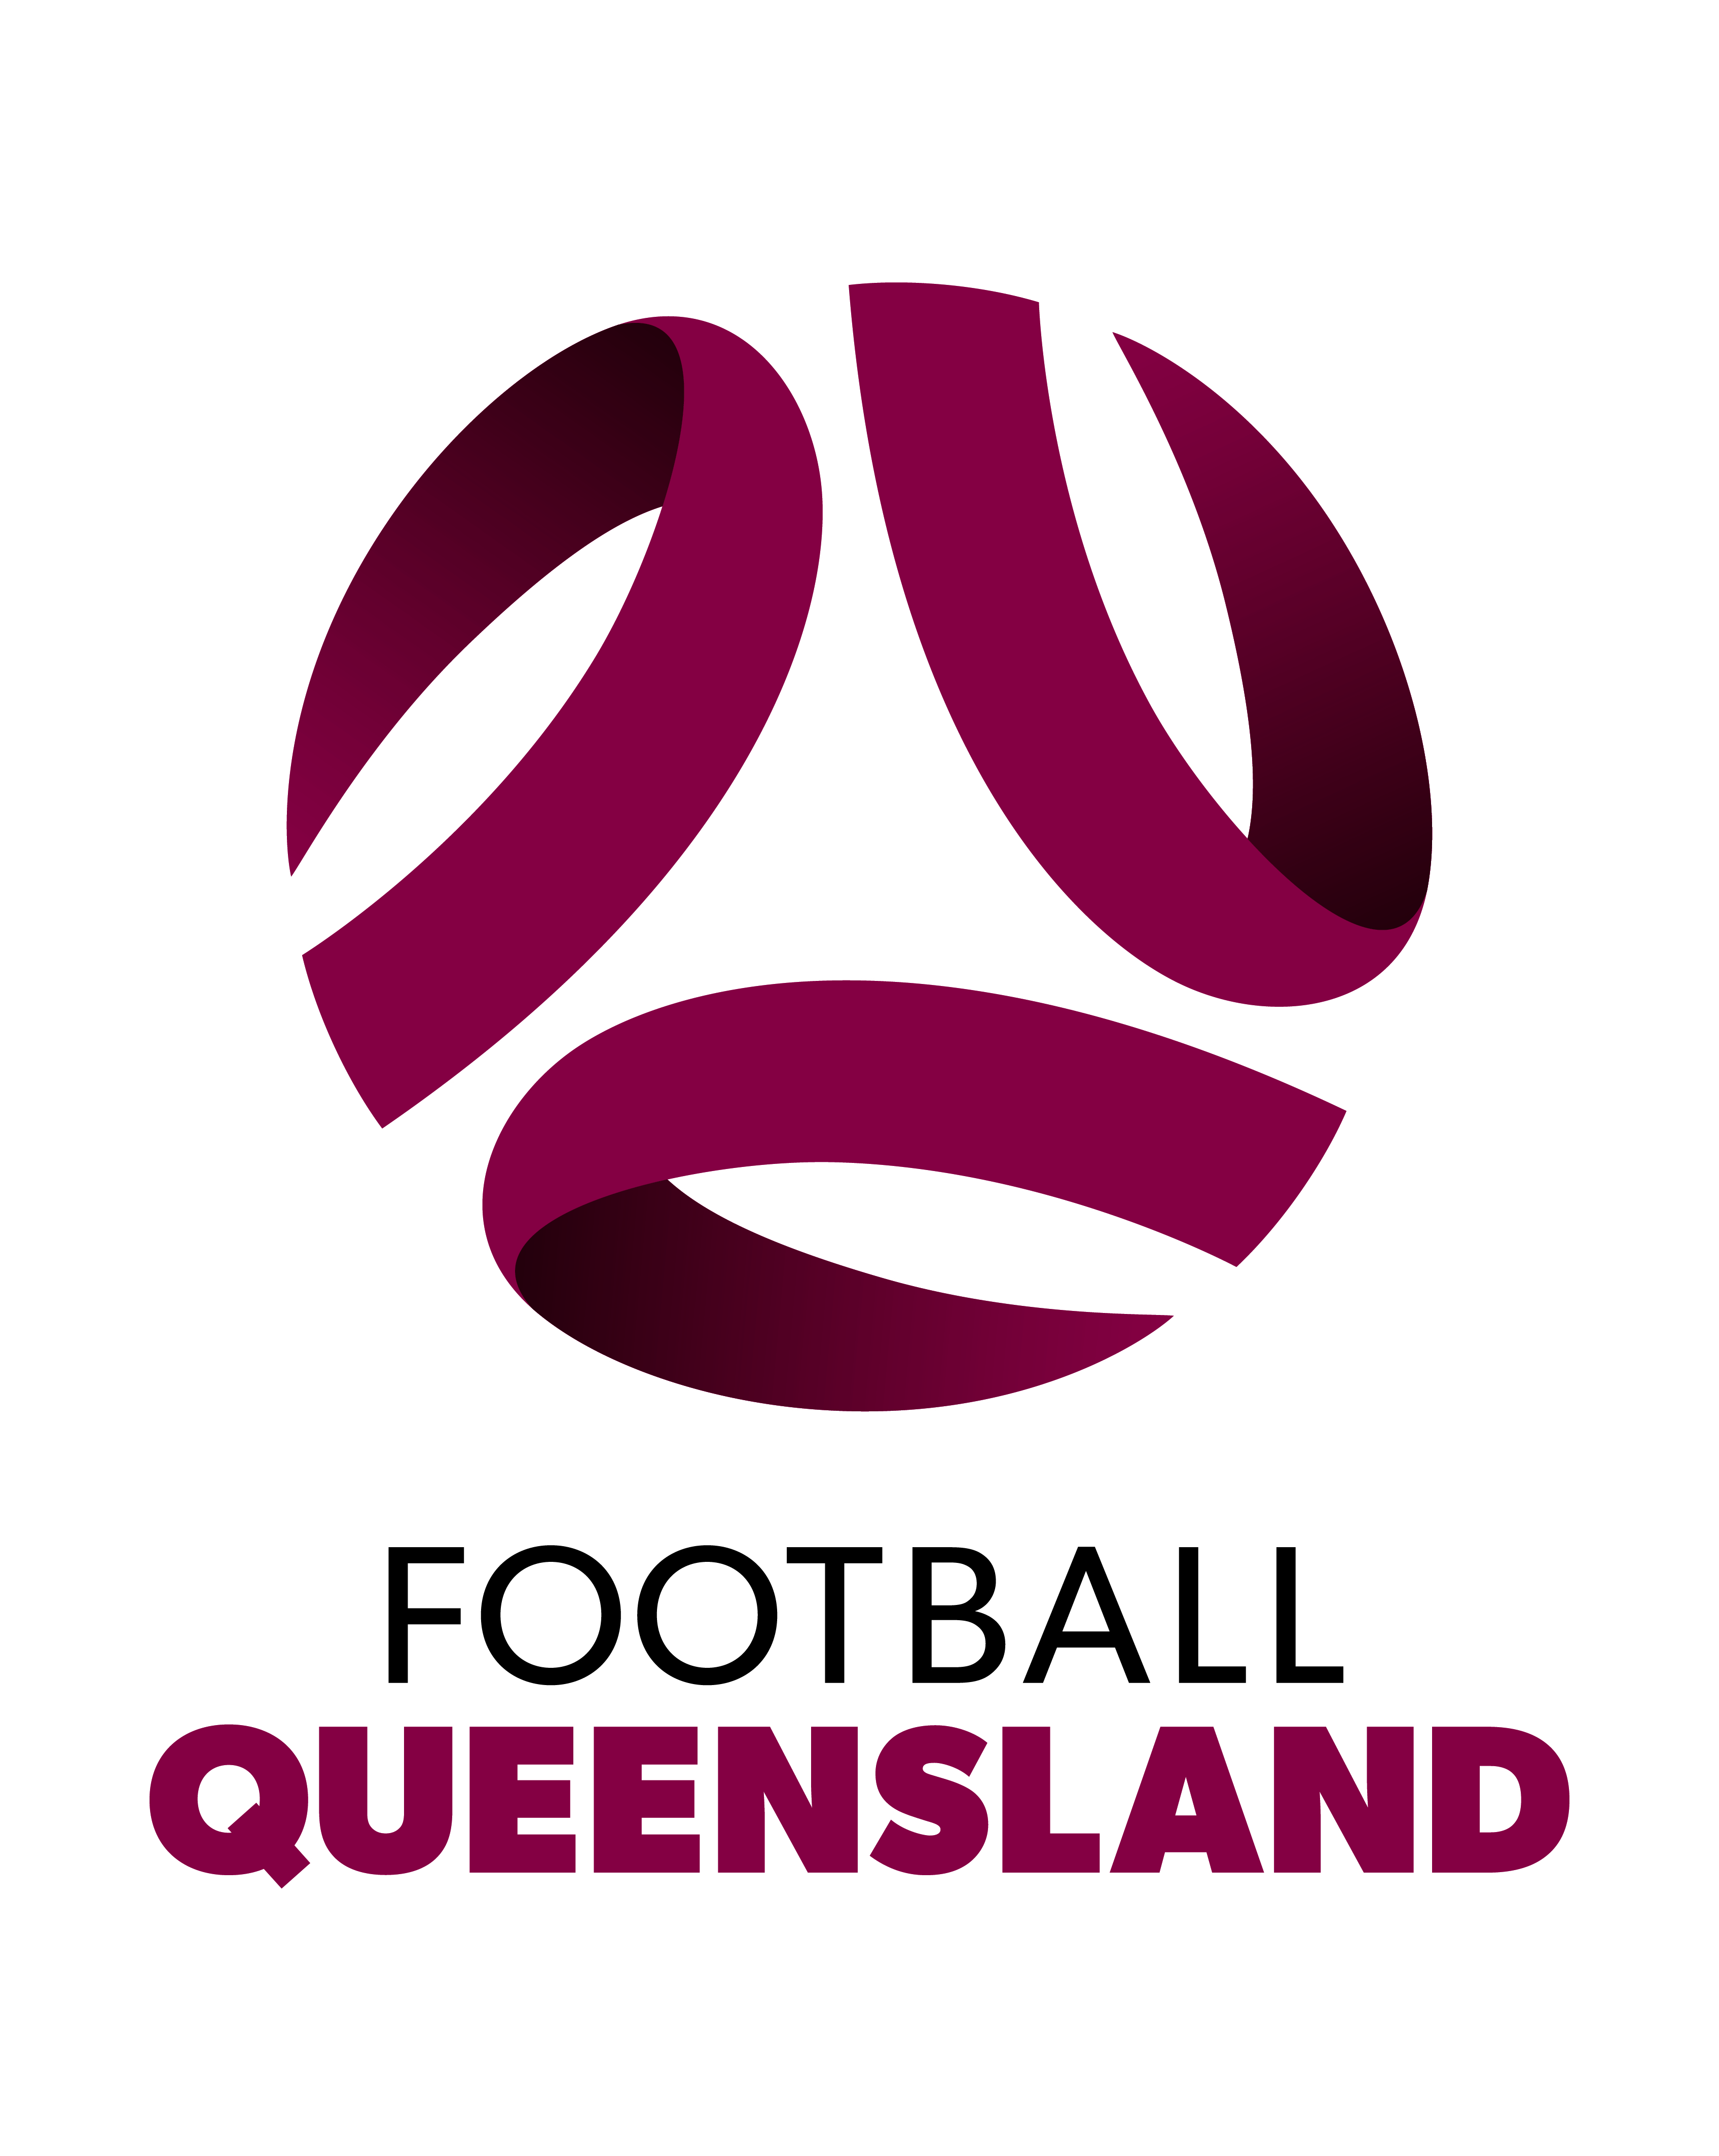 Football Queensland